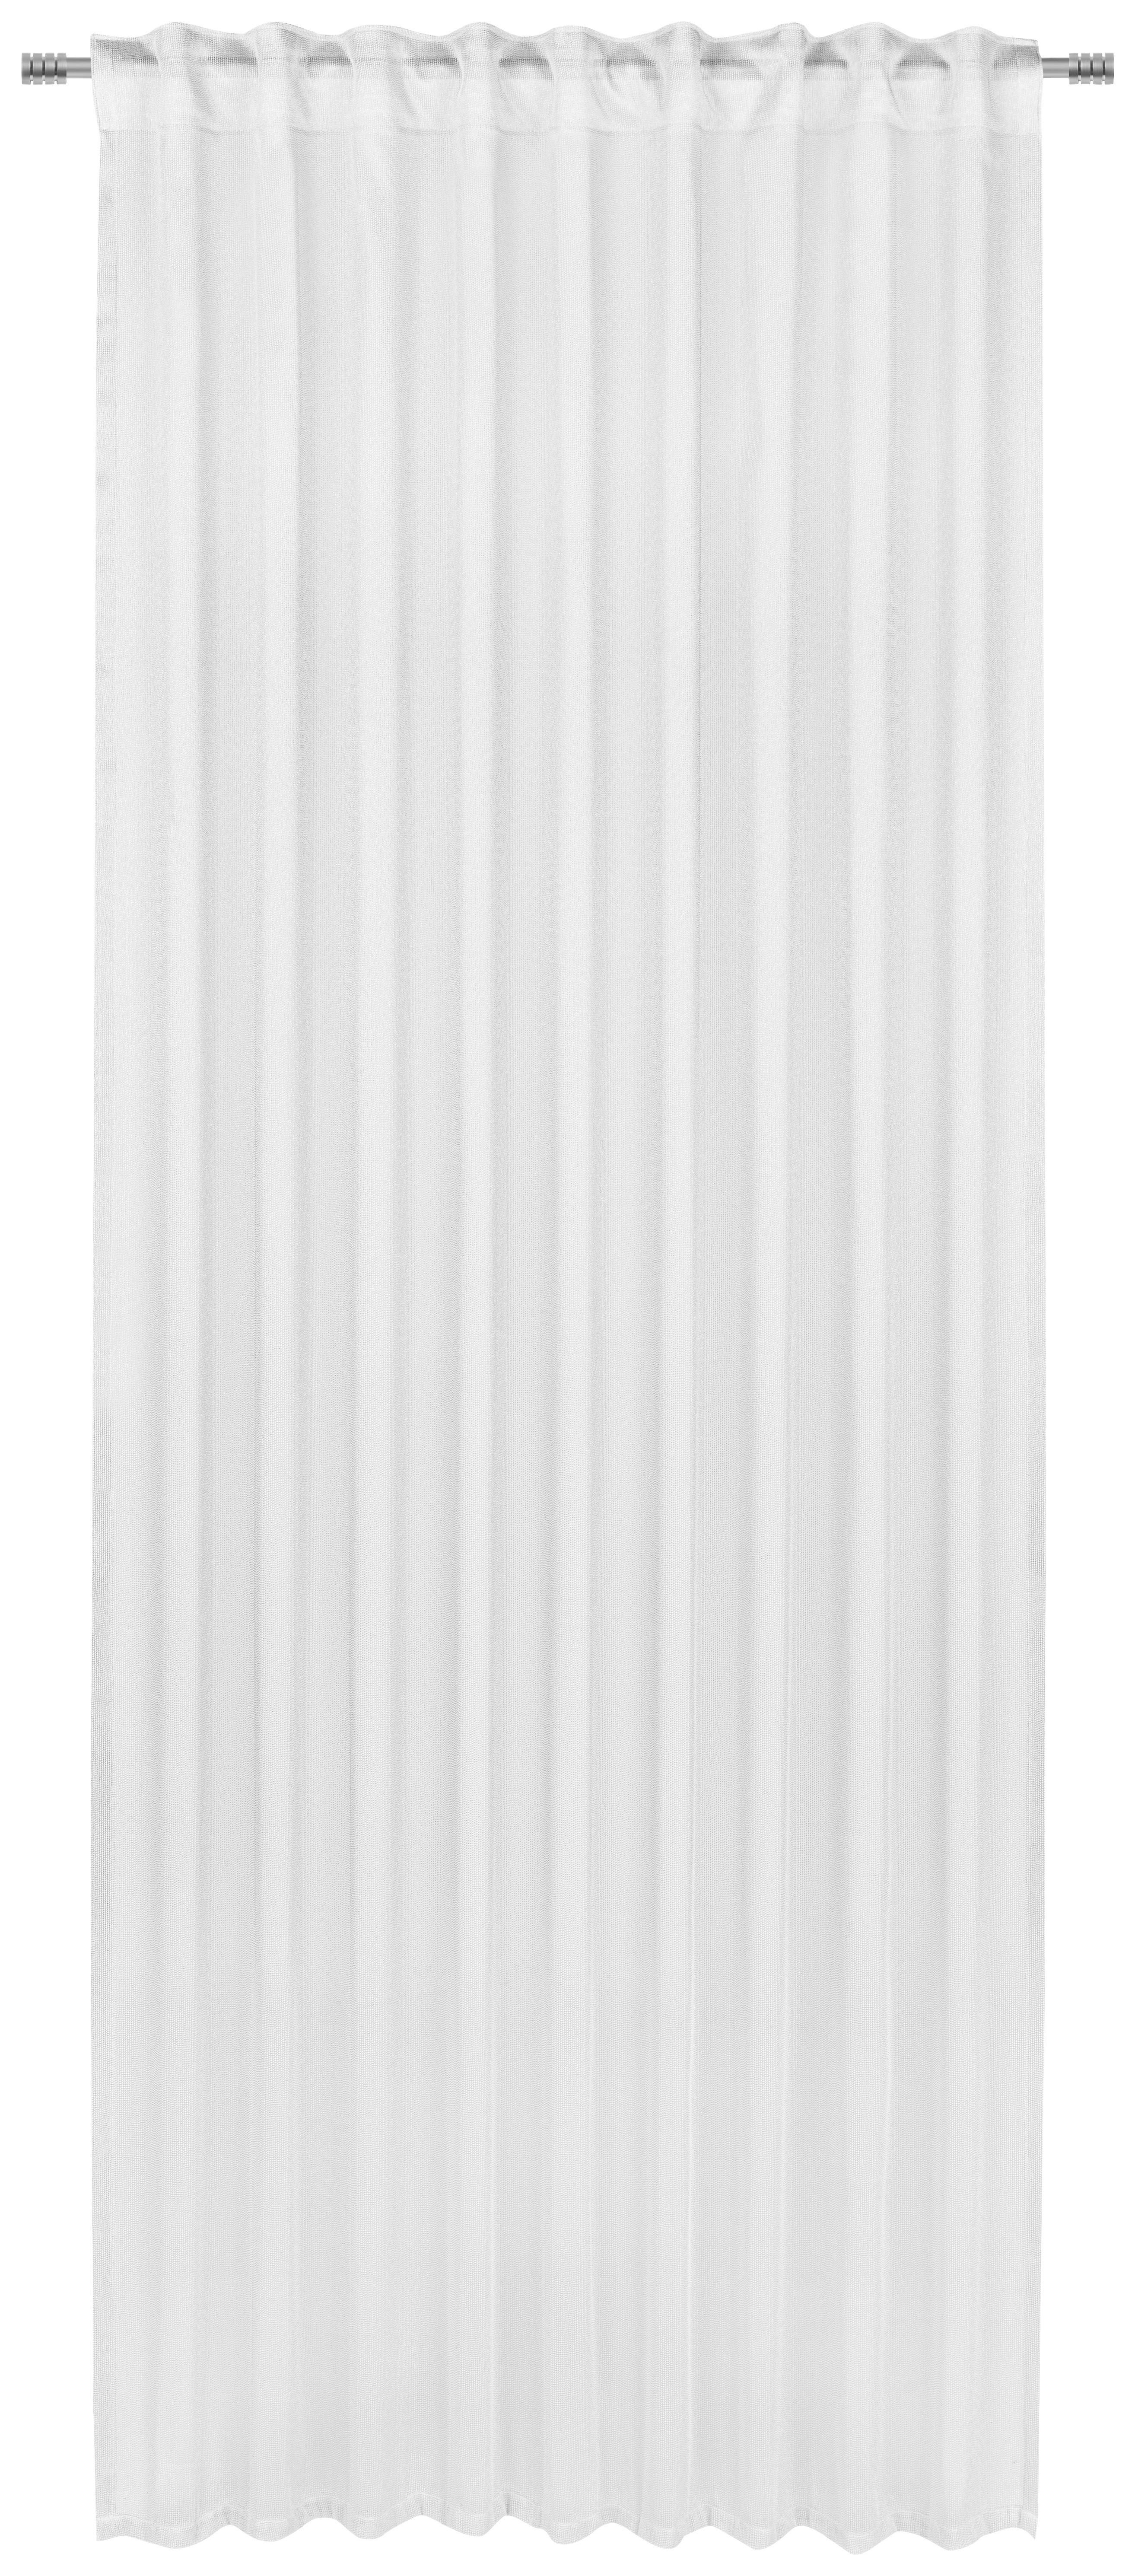 FERTIGVORHANG ALLURE transparent 140/245 cm   - Weiß, Basics, Textil (140/245cm) - Esposa